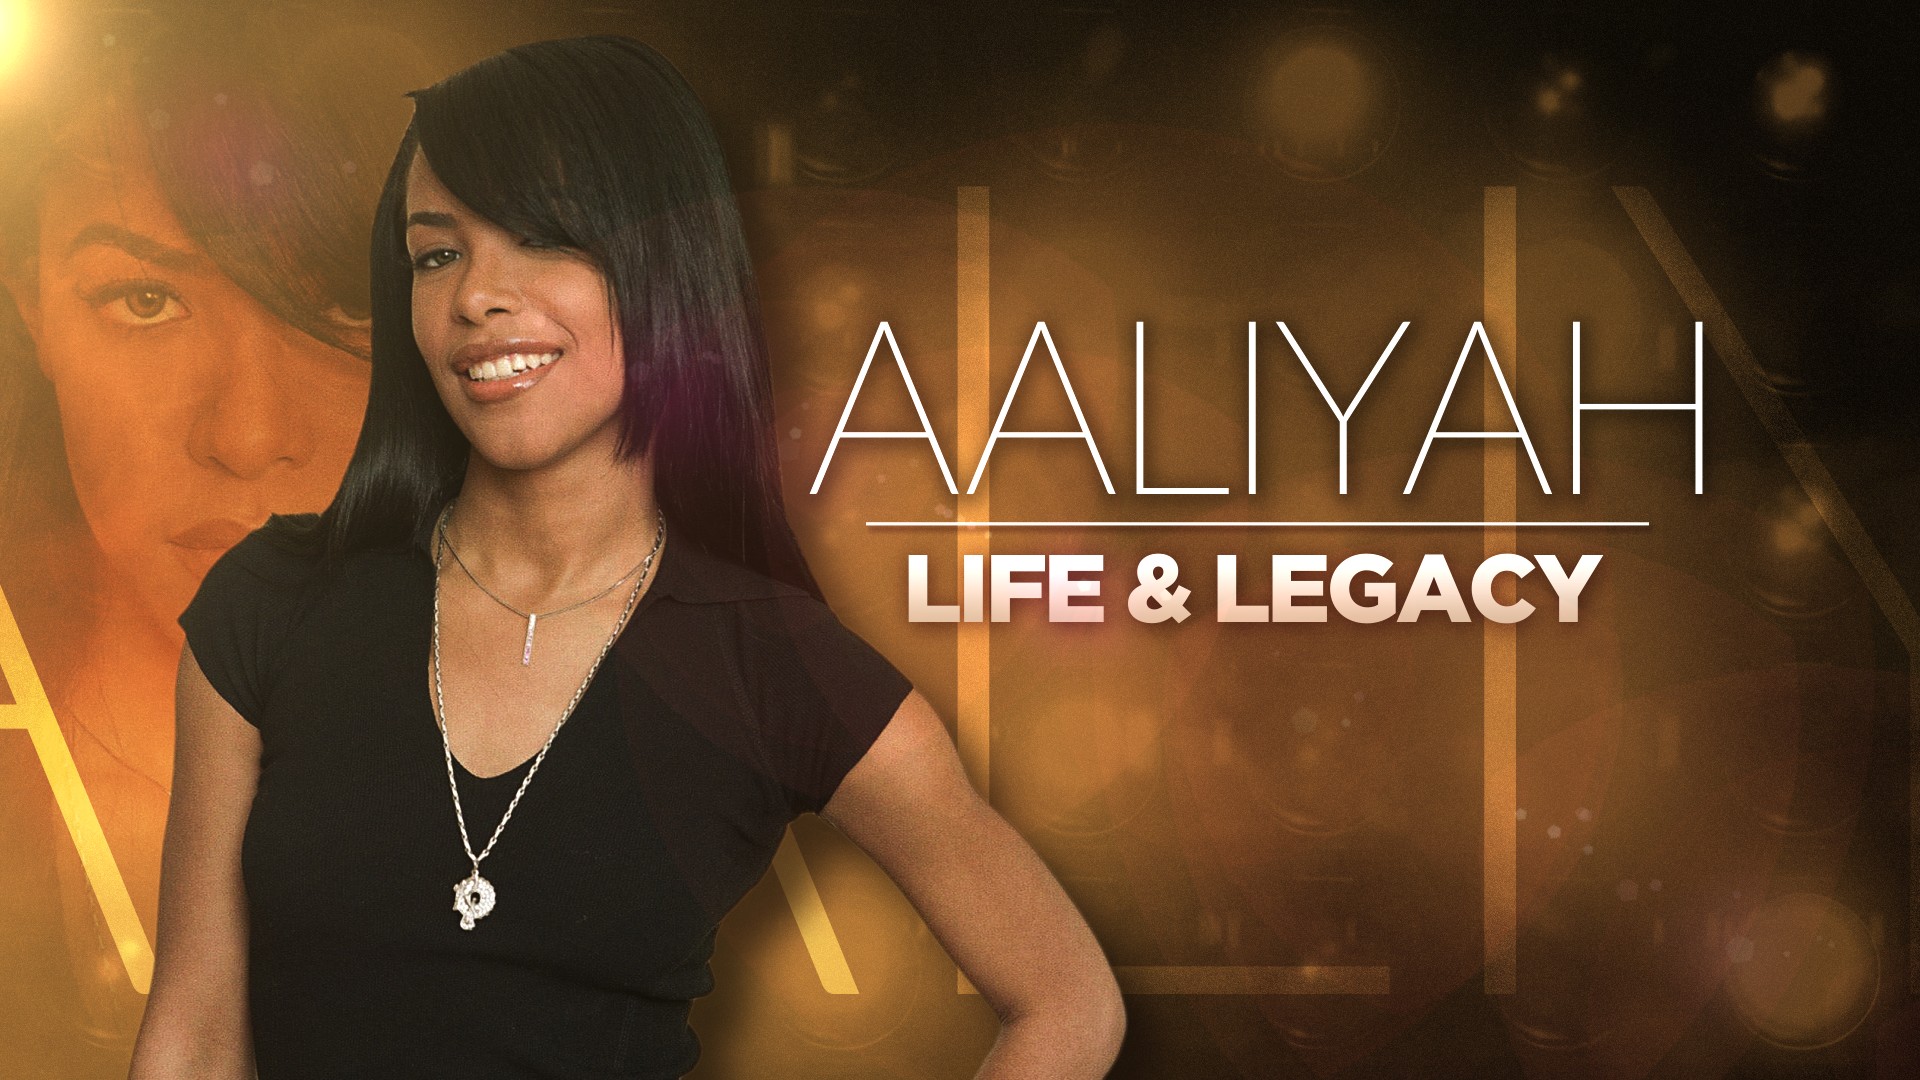 Aaliyah cremated was Aaliyah Nevarez